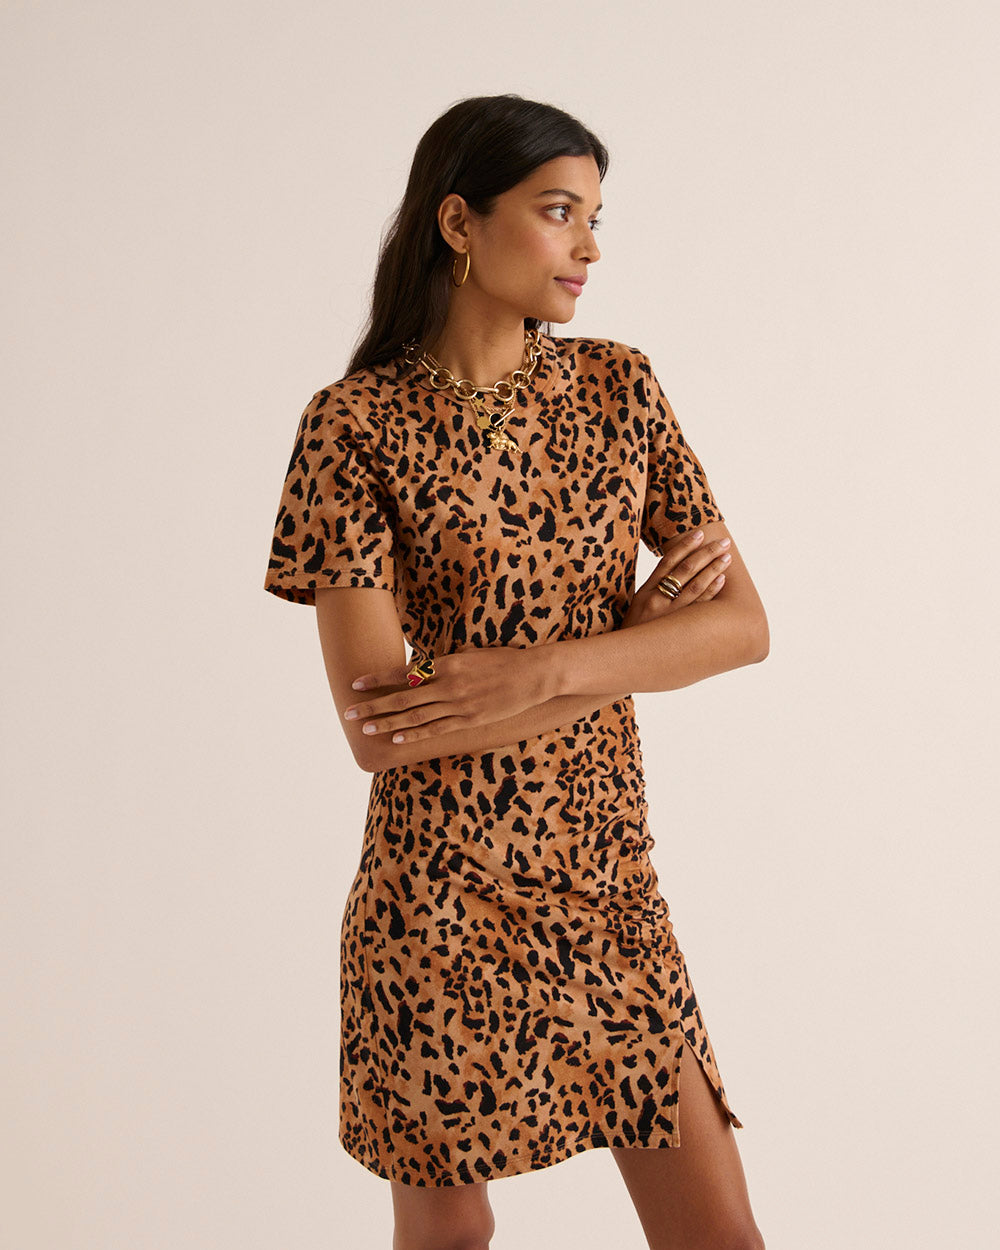 Floréal cheetah cappuccino dress